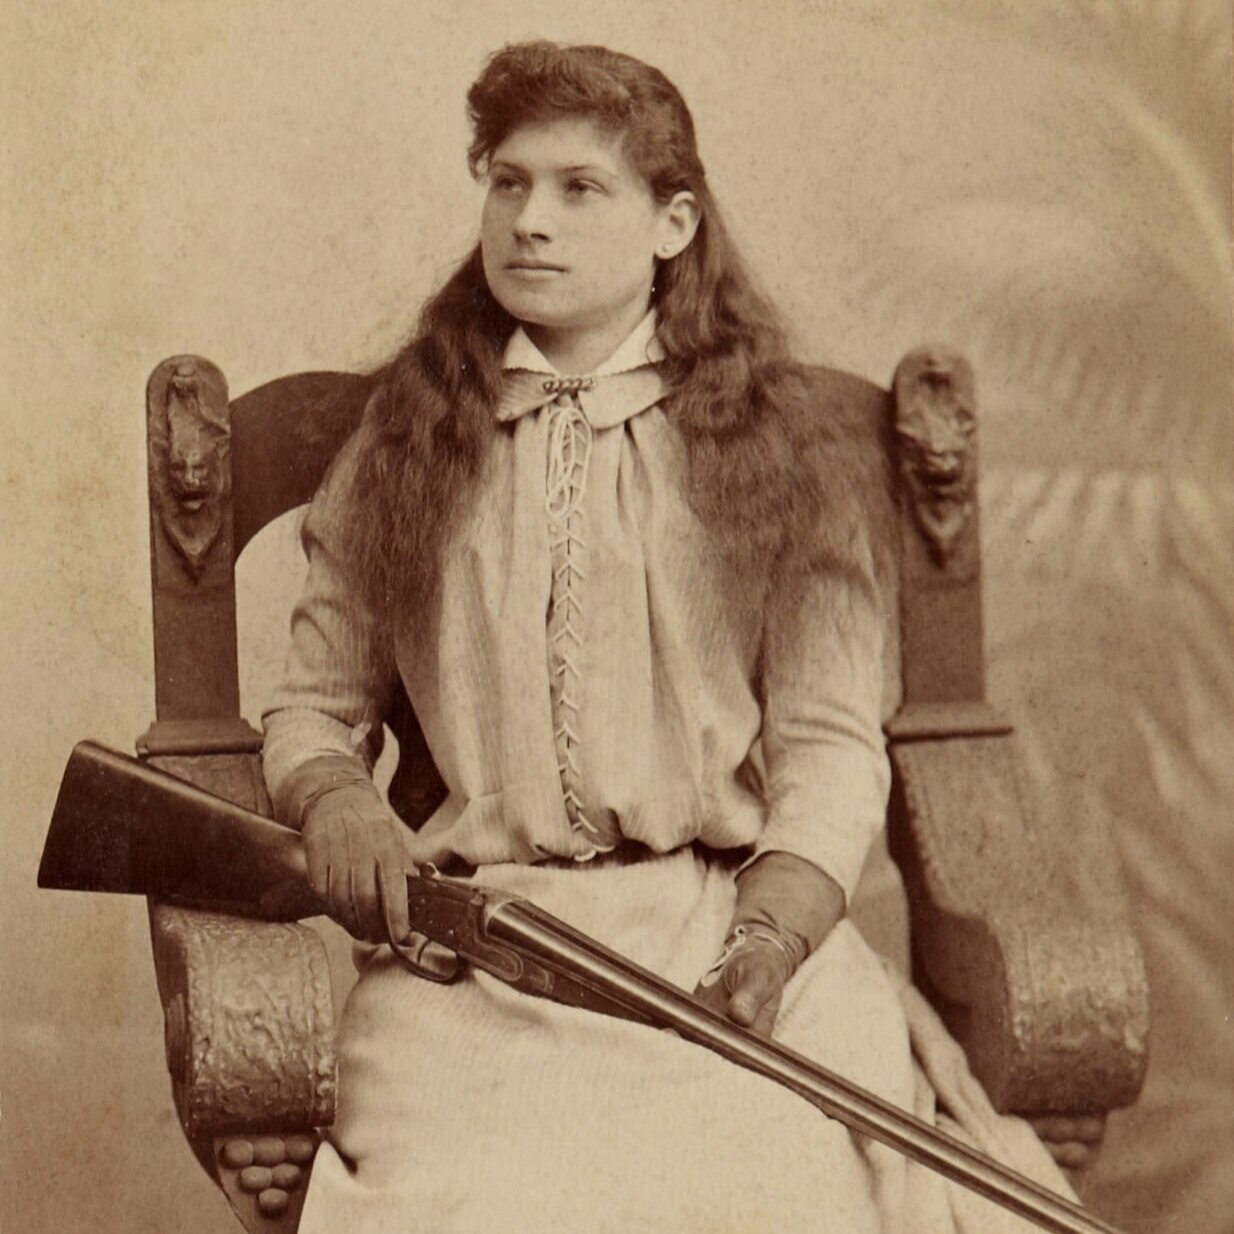 Archival photo of Annie Oakley holding her favorite double barrel shotgun. Circa 1880.